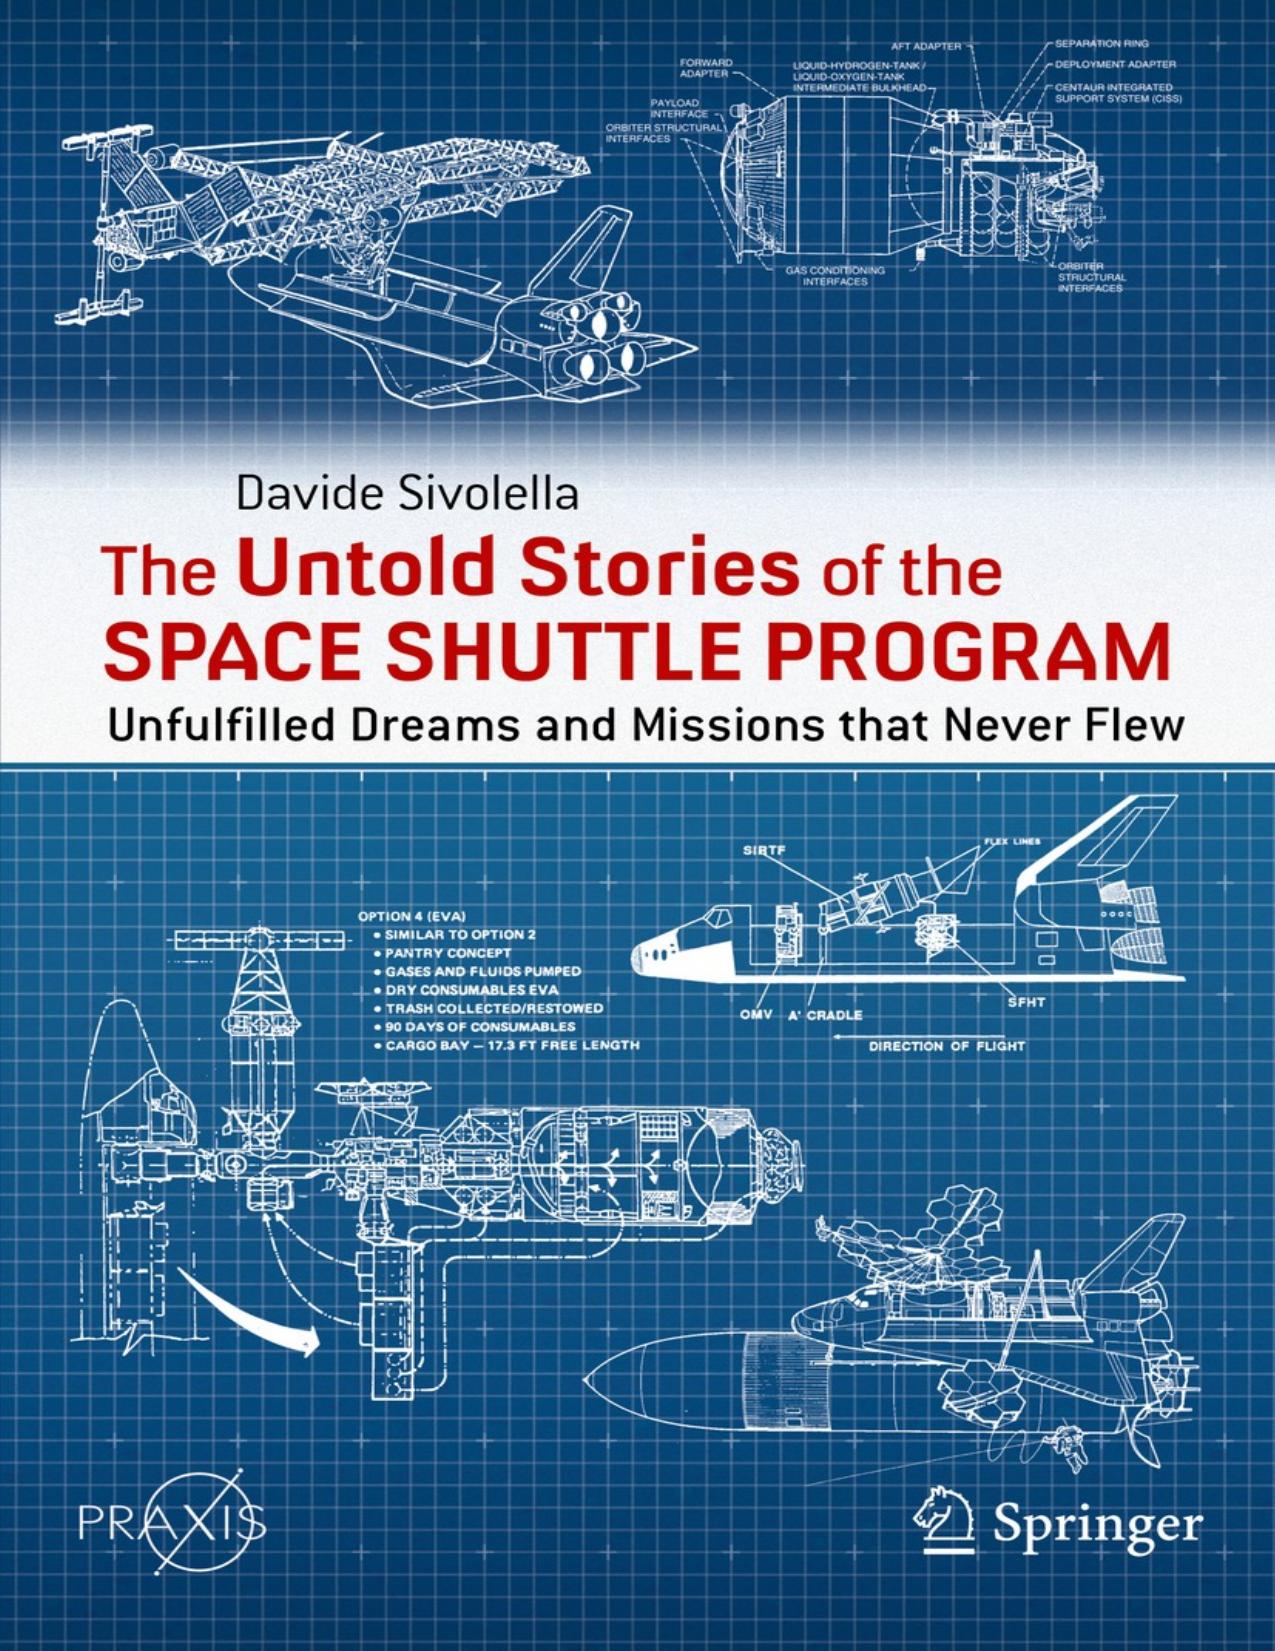 The Untold Stories of the Space Shuttle Program by Davide Sivolella